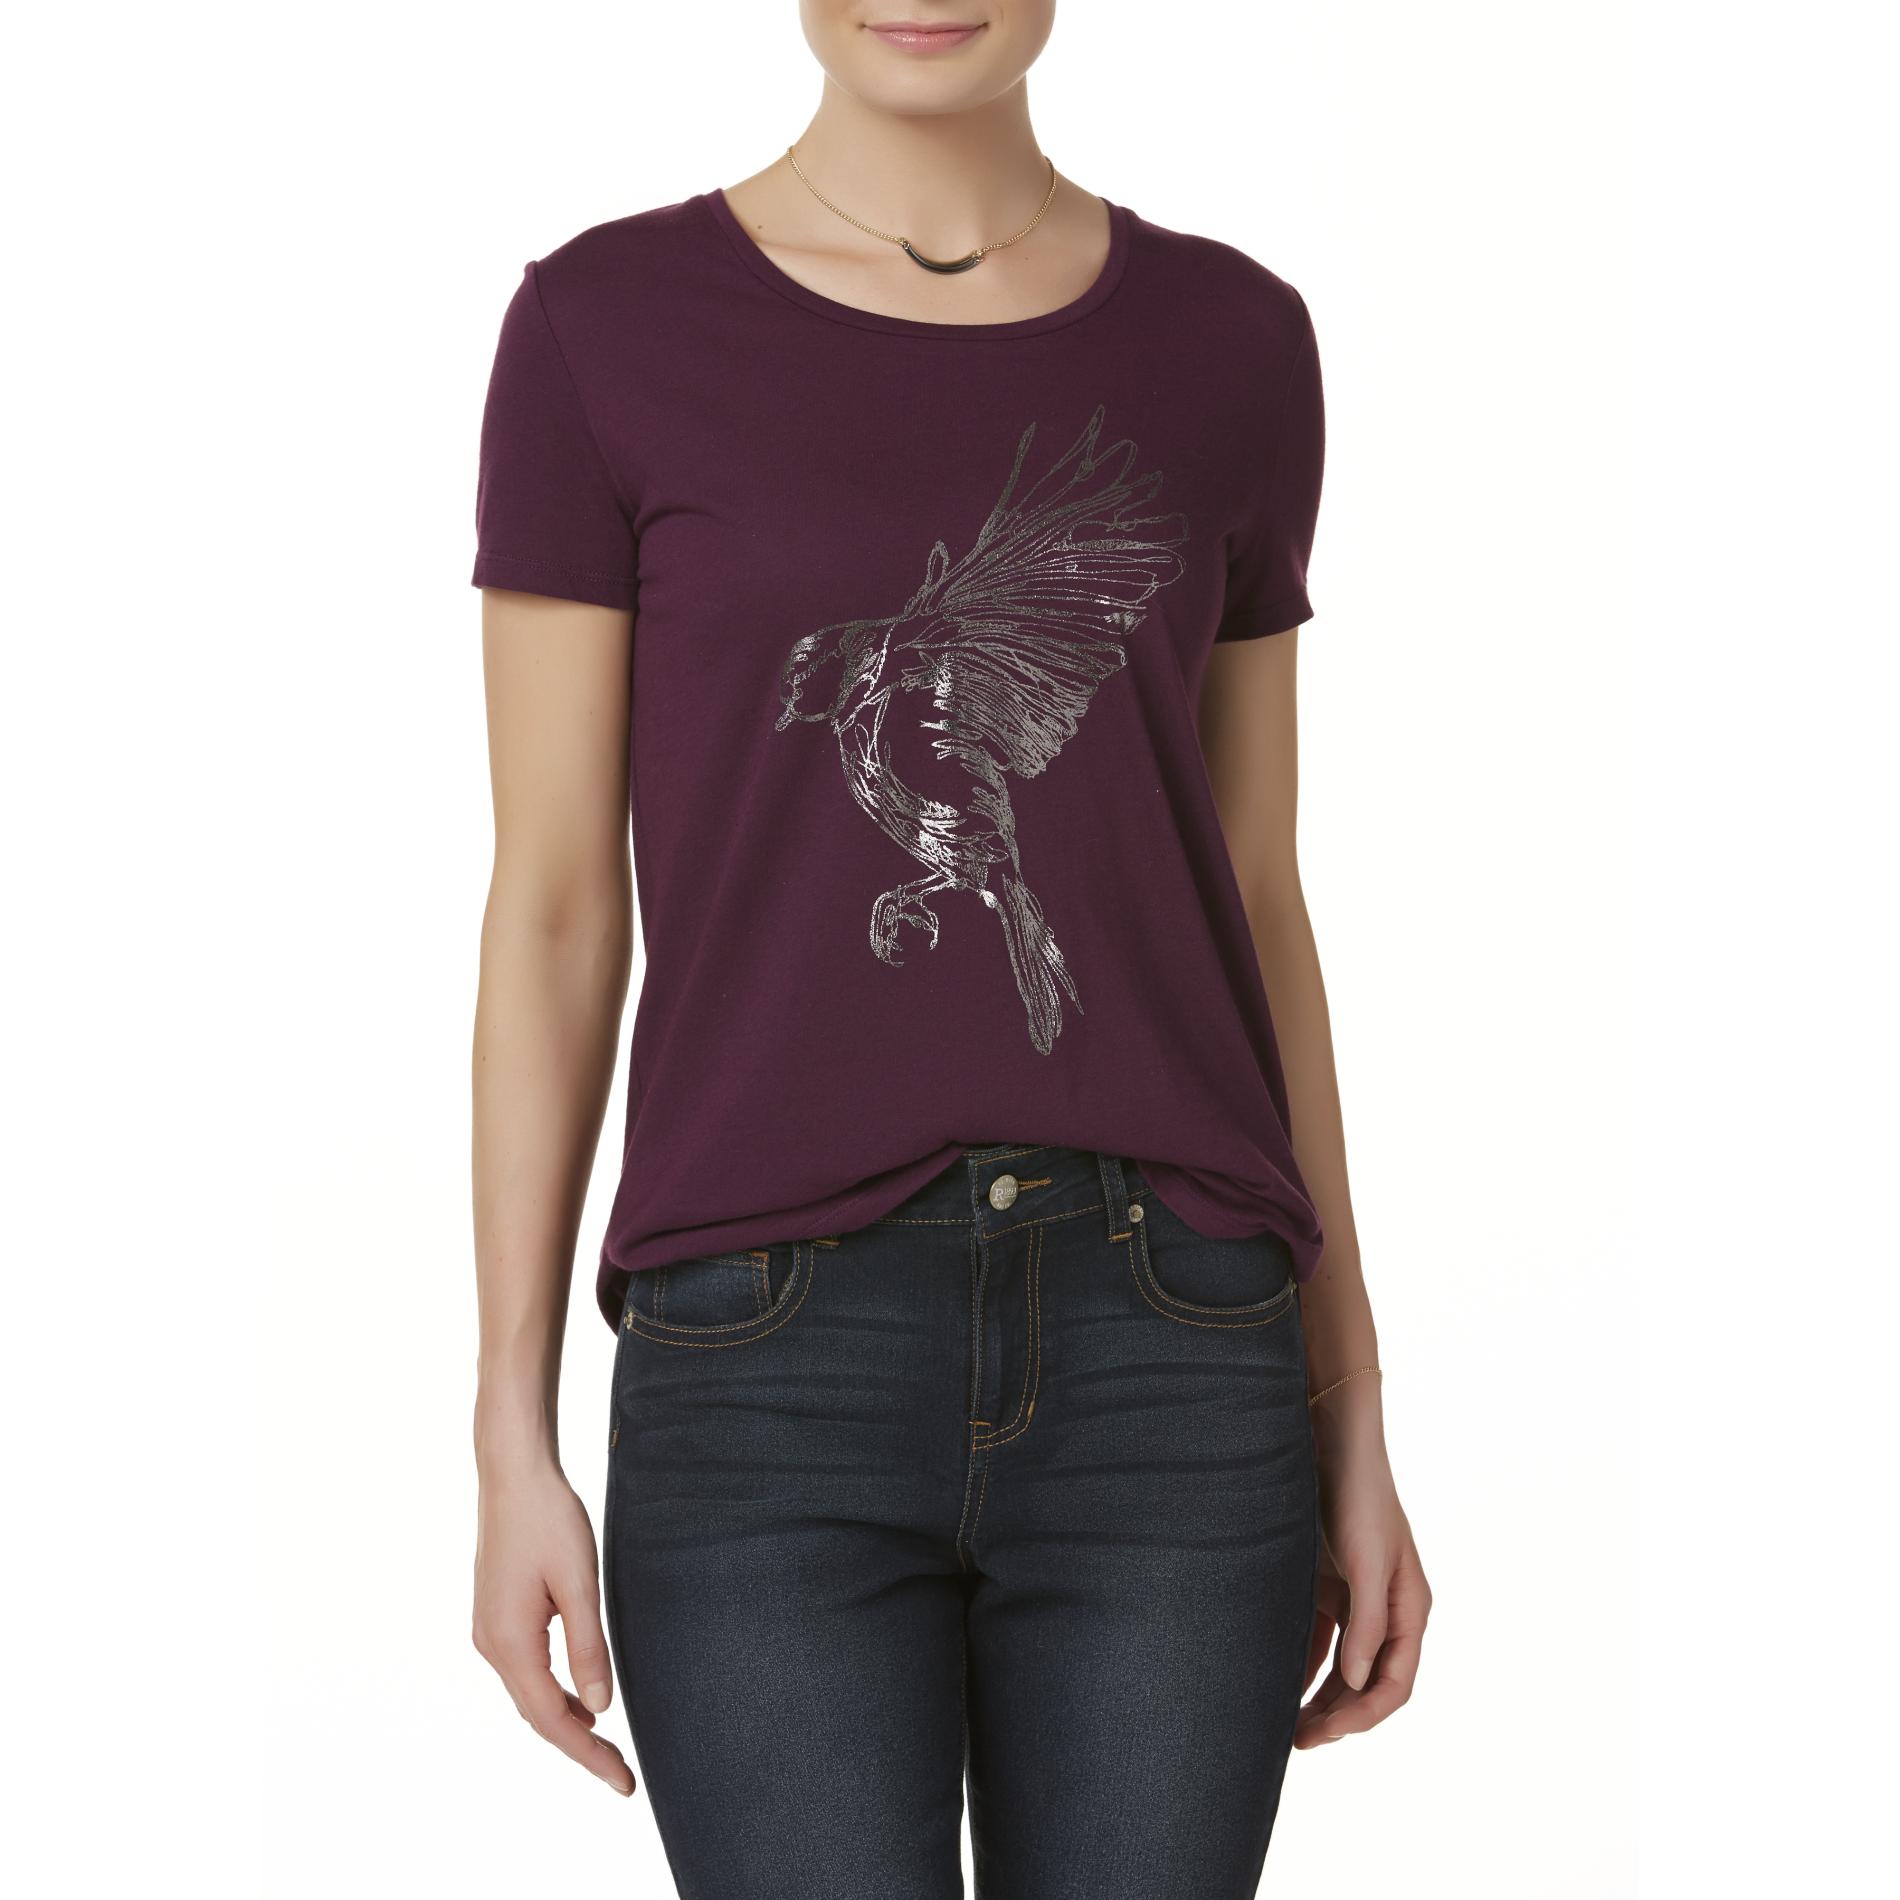 Simply Styled Women's Graphic T-Shirt - Bird